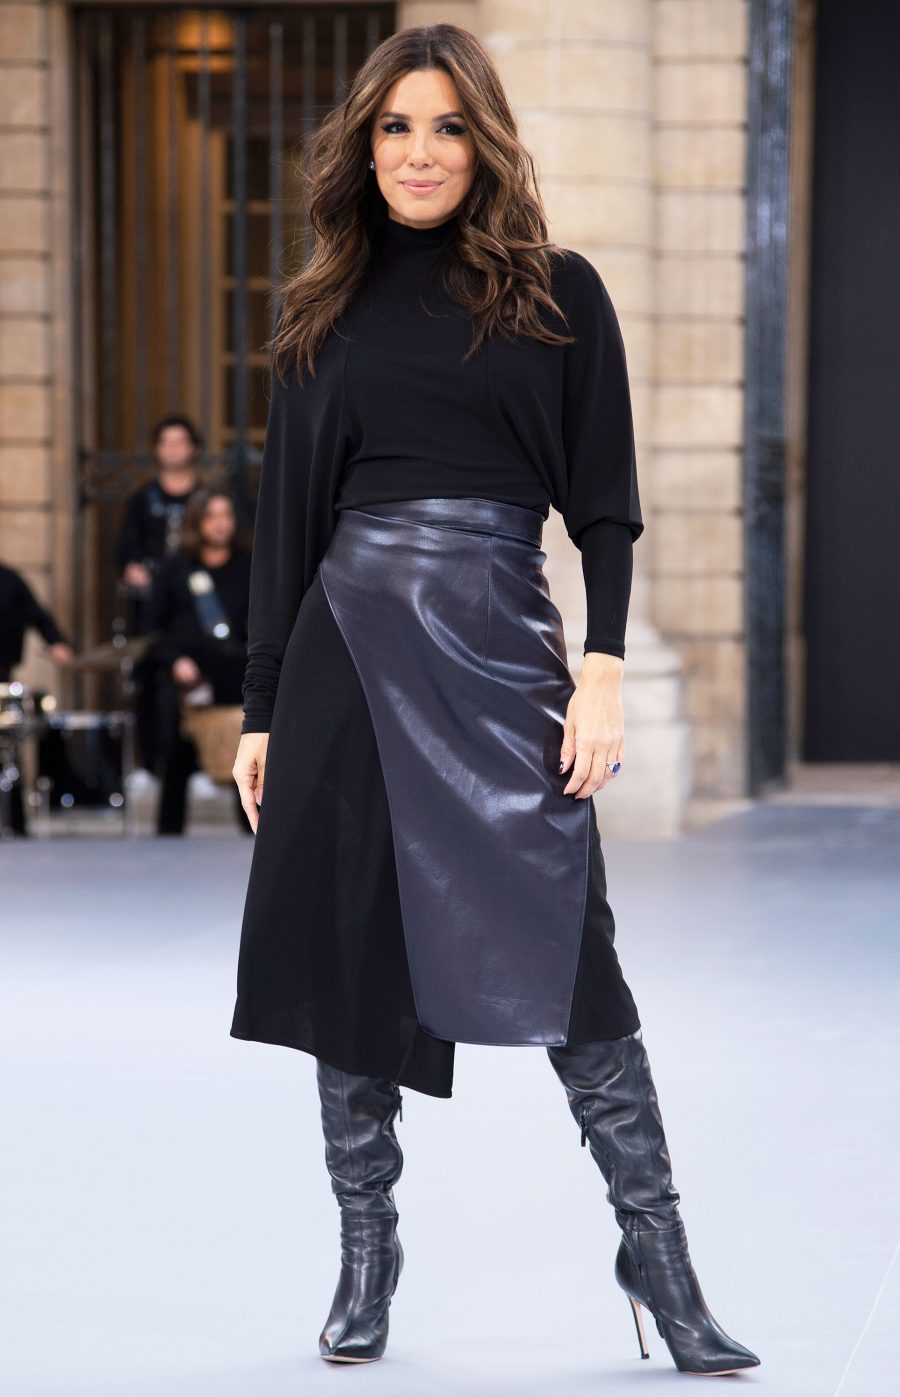 L'Oreal Paris Fashion Show - Eva Longoria